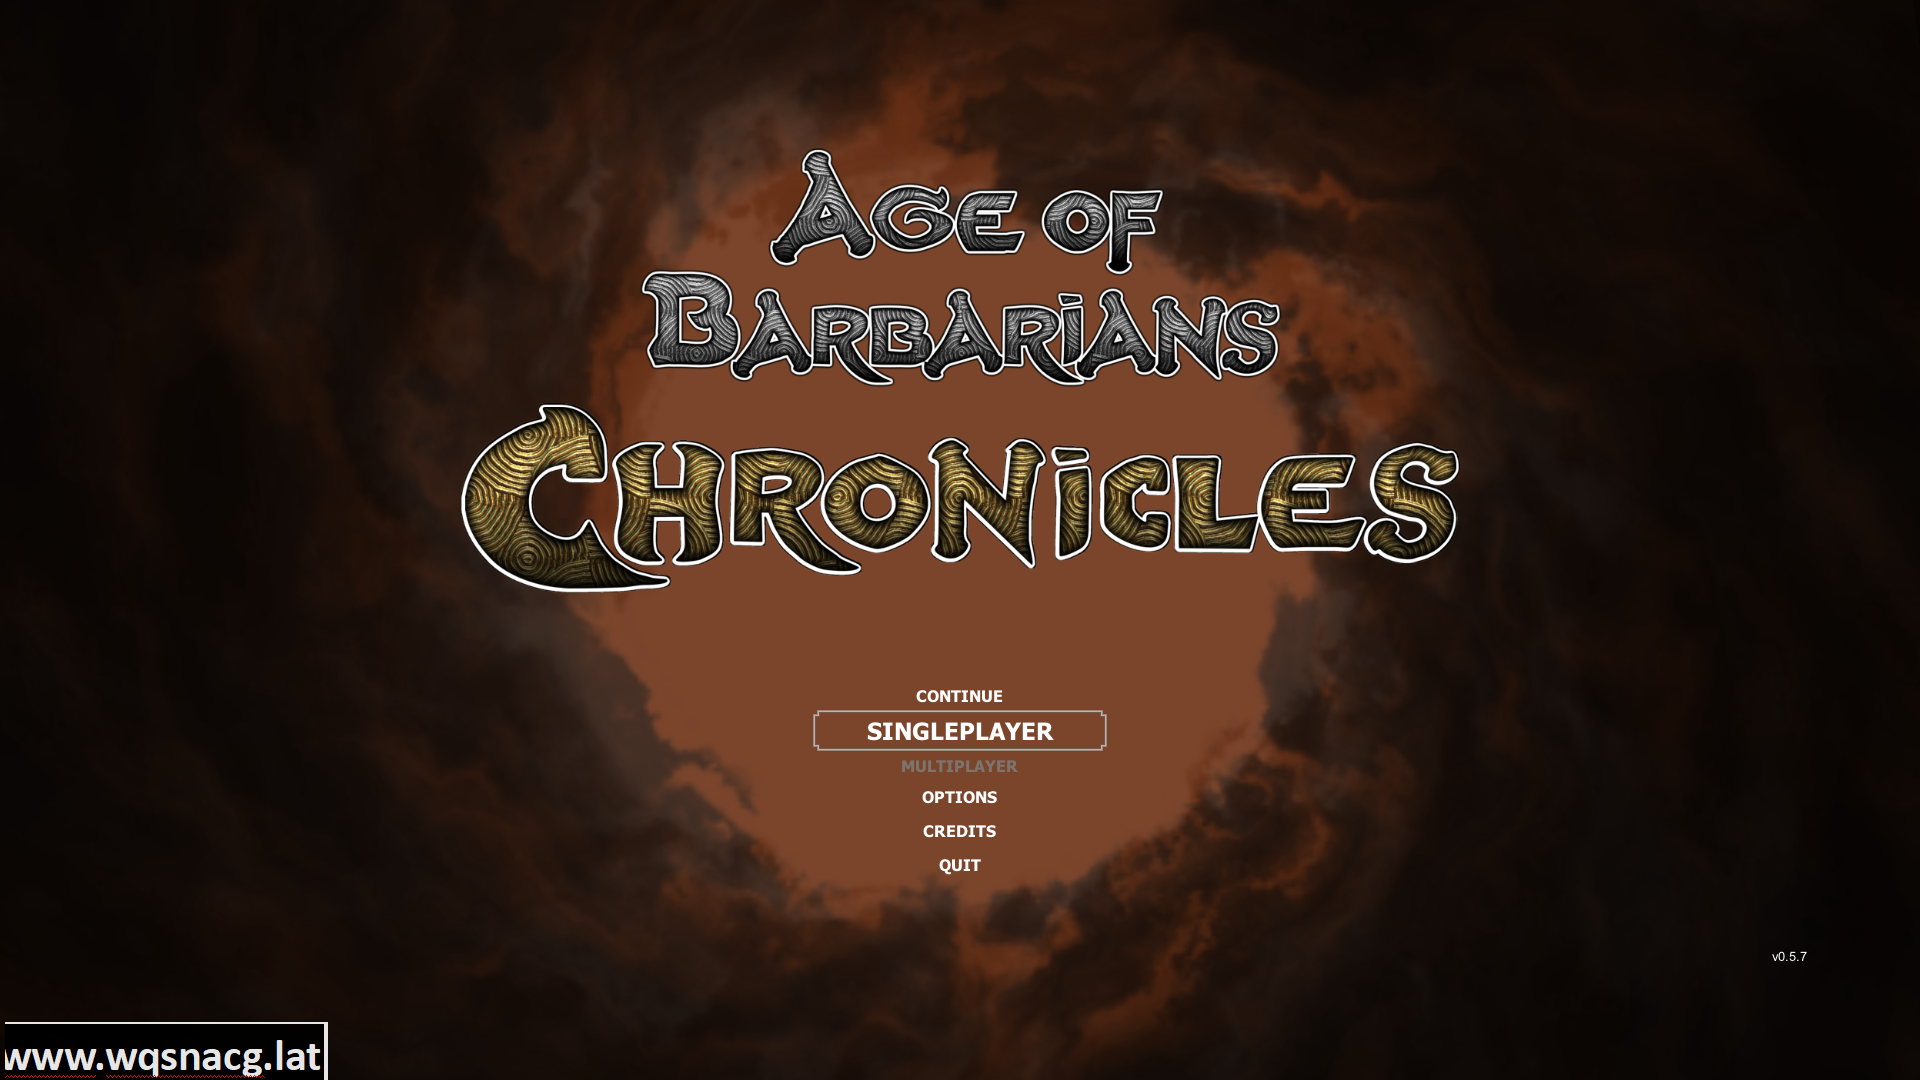 [3D横板/ACT/有动画] 蛮战编年史时代 Age of Barbarians Chronicles V0.57 步兵版 [多空/2.5G]-万千少女游戏万千少女游戏网